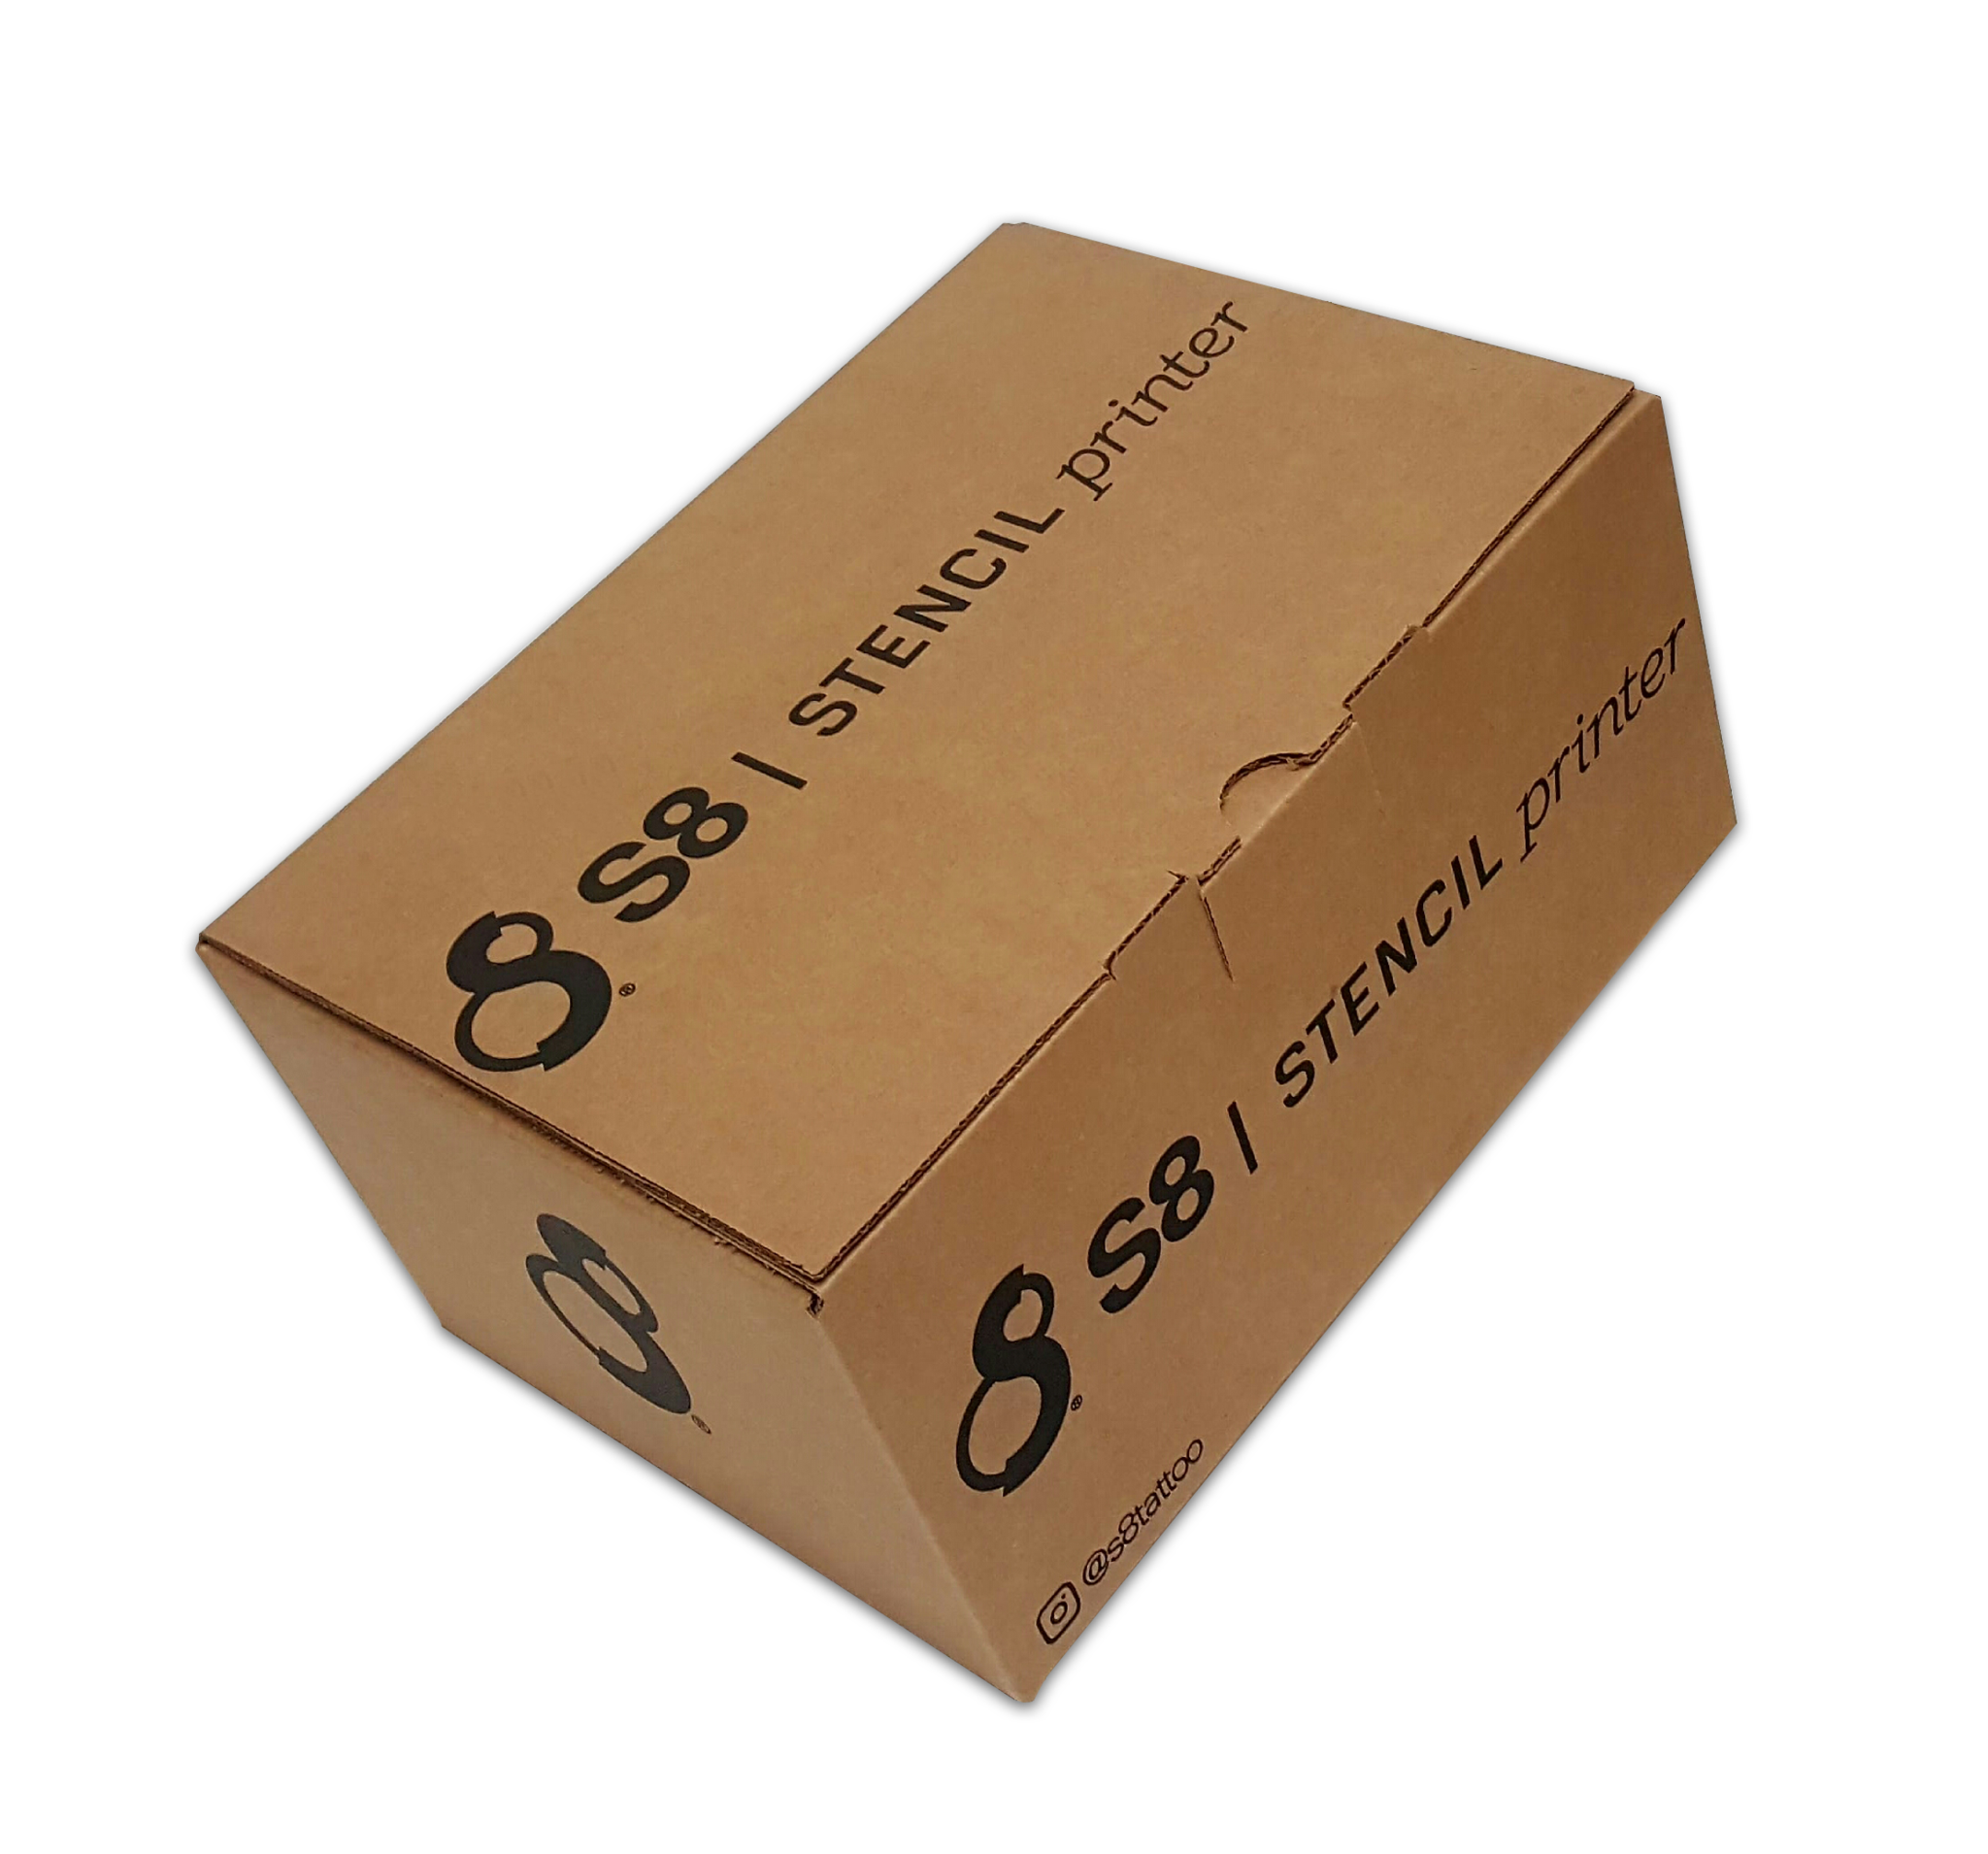 S8 TATTOO STENCIL PRINTER BLUETOOTH: ANDROID/WINDOWS – OPEN BOX